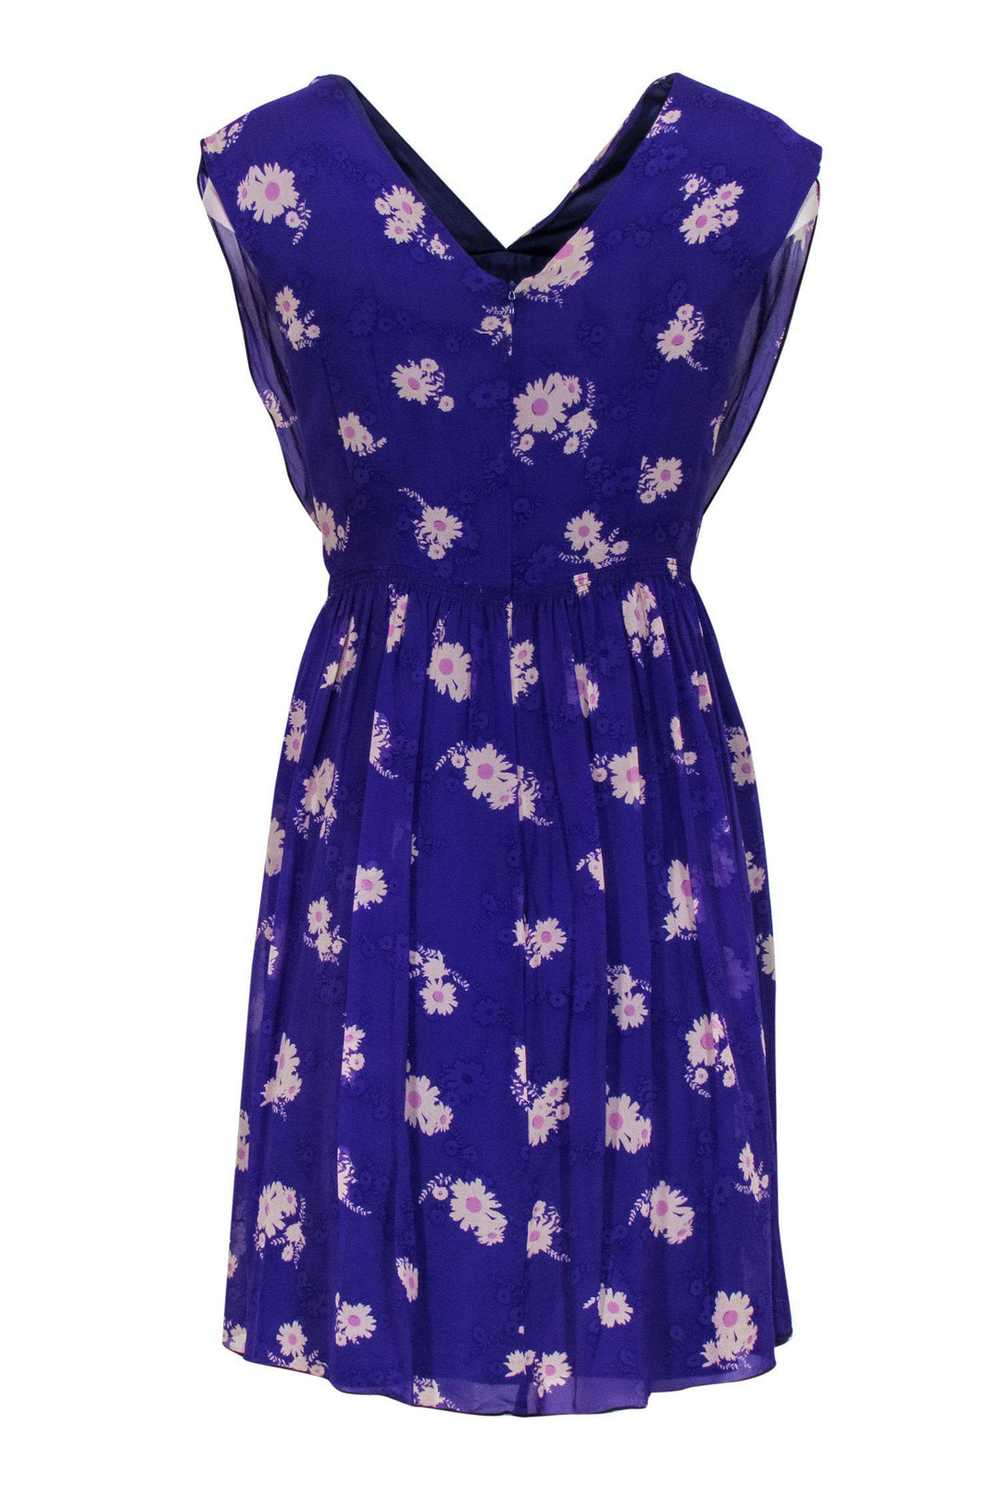 Anna Sui - Purple Floral Silk Draped Dress Sz 4 - image 3